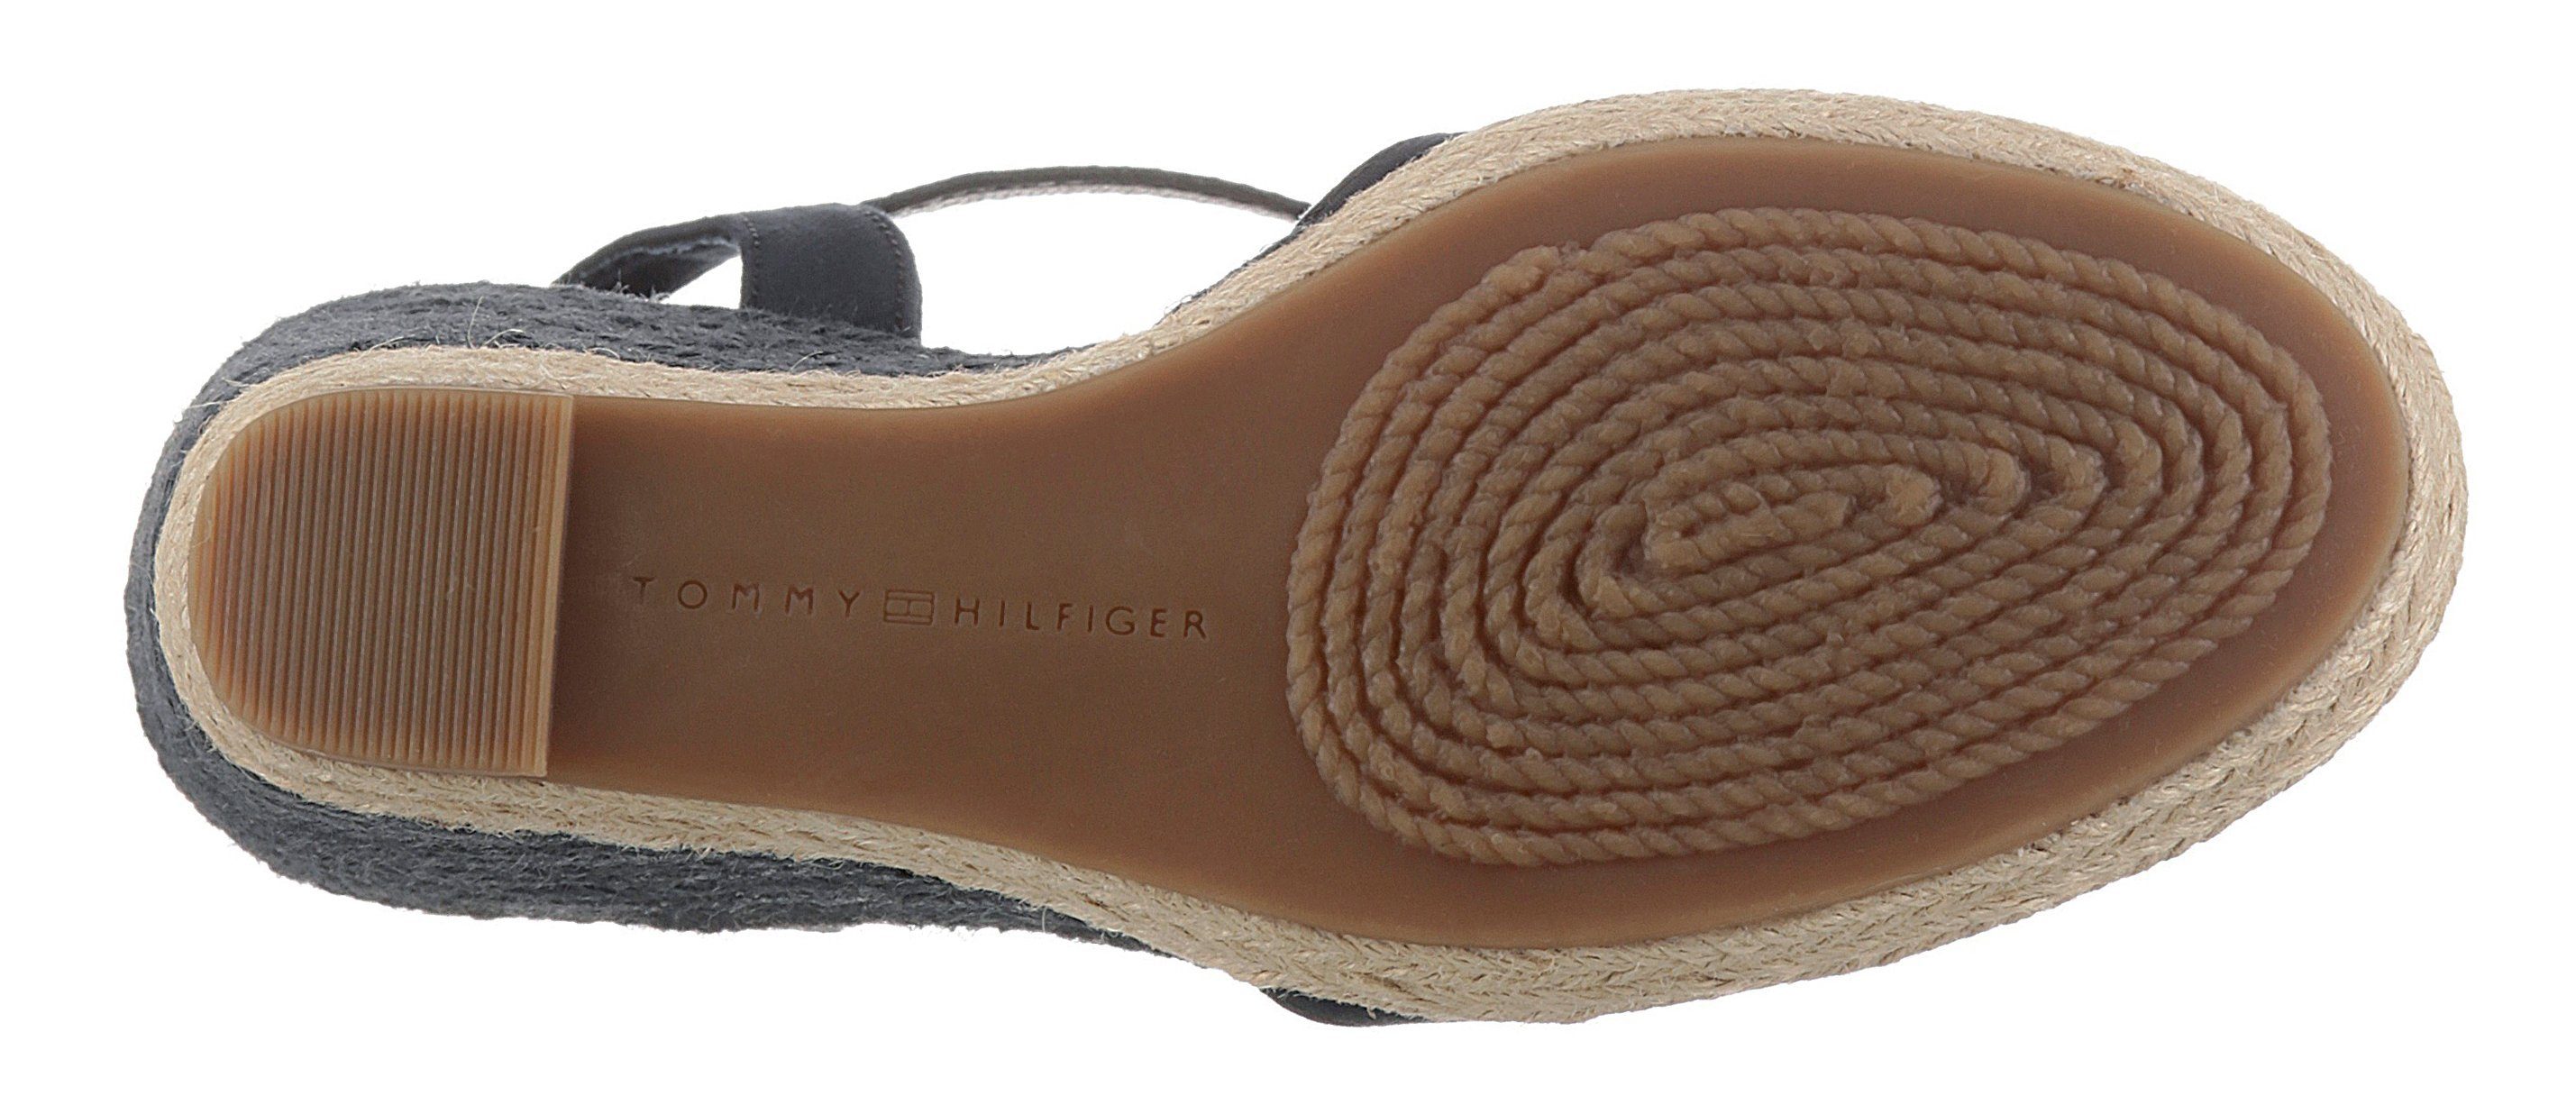 Tommy Hilfiger BASIC CLOSED TOE bezogenem Sandalette Keilabsatz Desert-Sky HIGH WEDGE mit